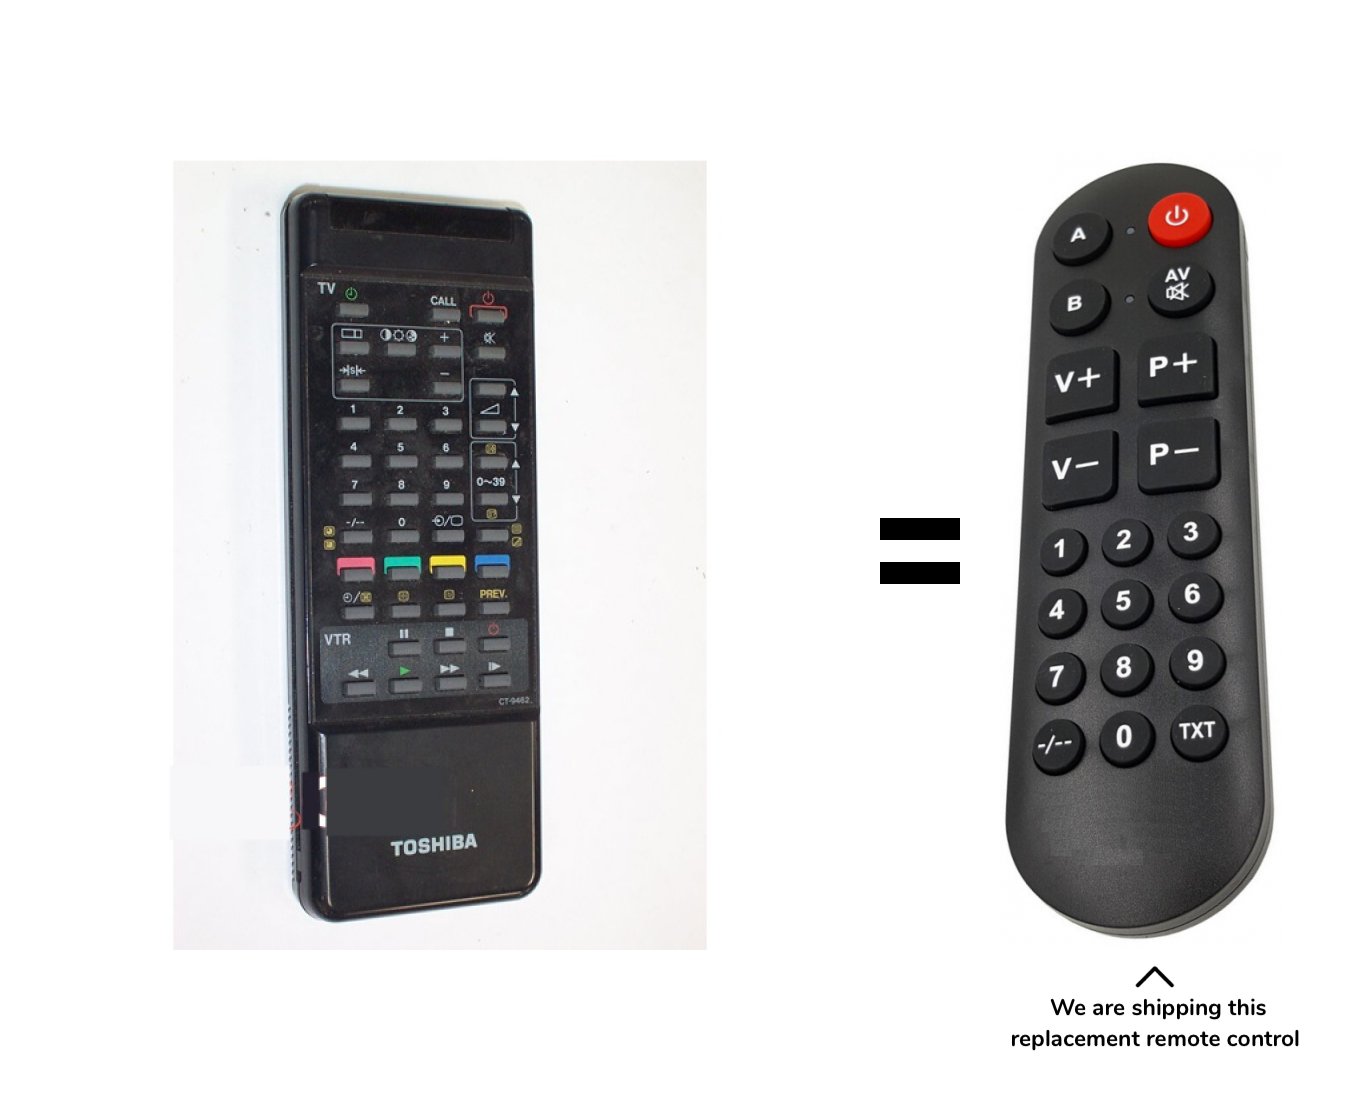 Toshiba CT-9399 remote control for seniors